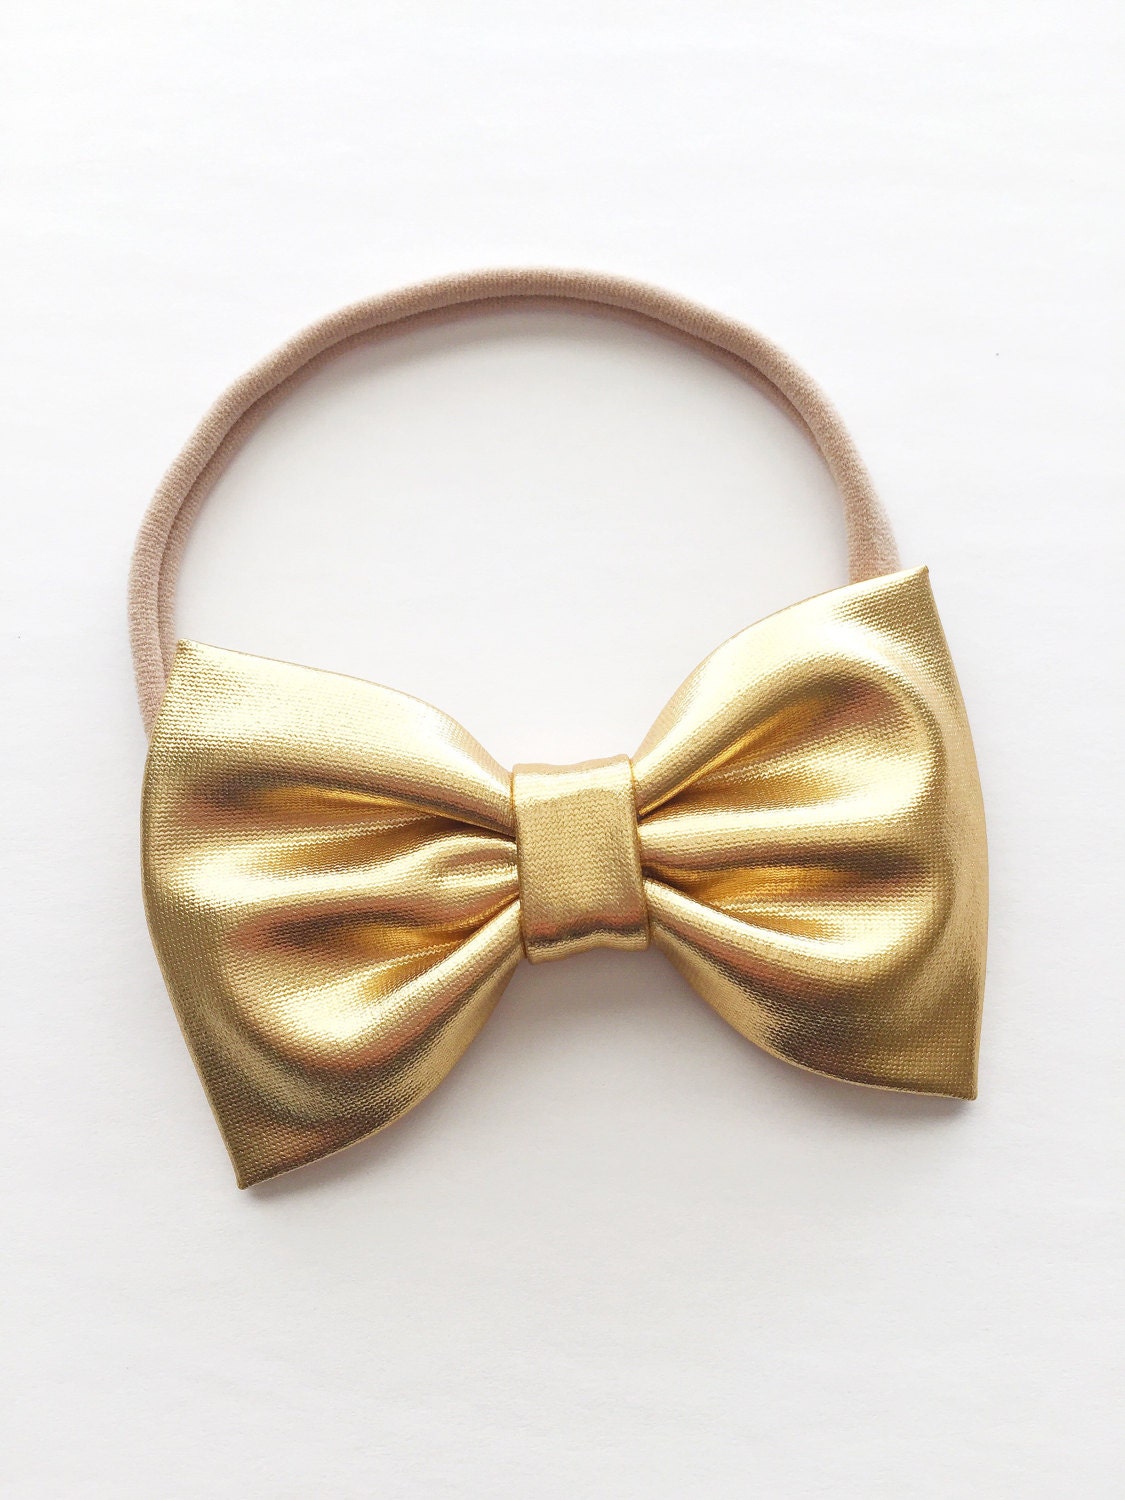 Gold Bow Baby Gold Headband Metallic Gold Bow Gold Bow | Etsy